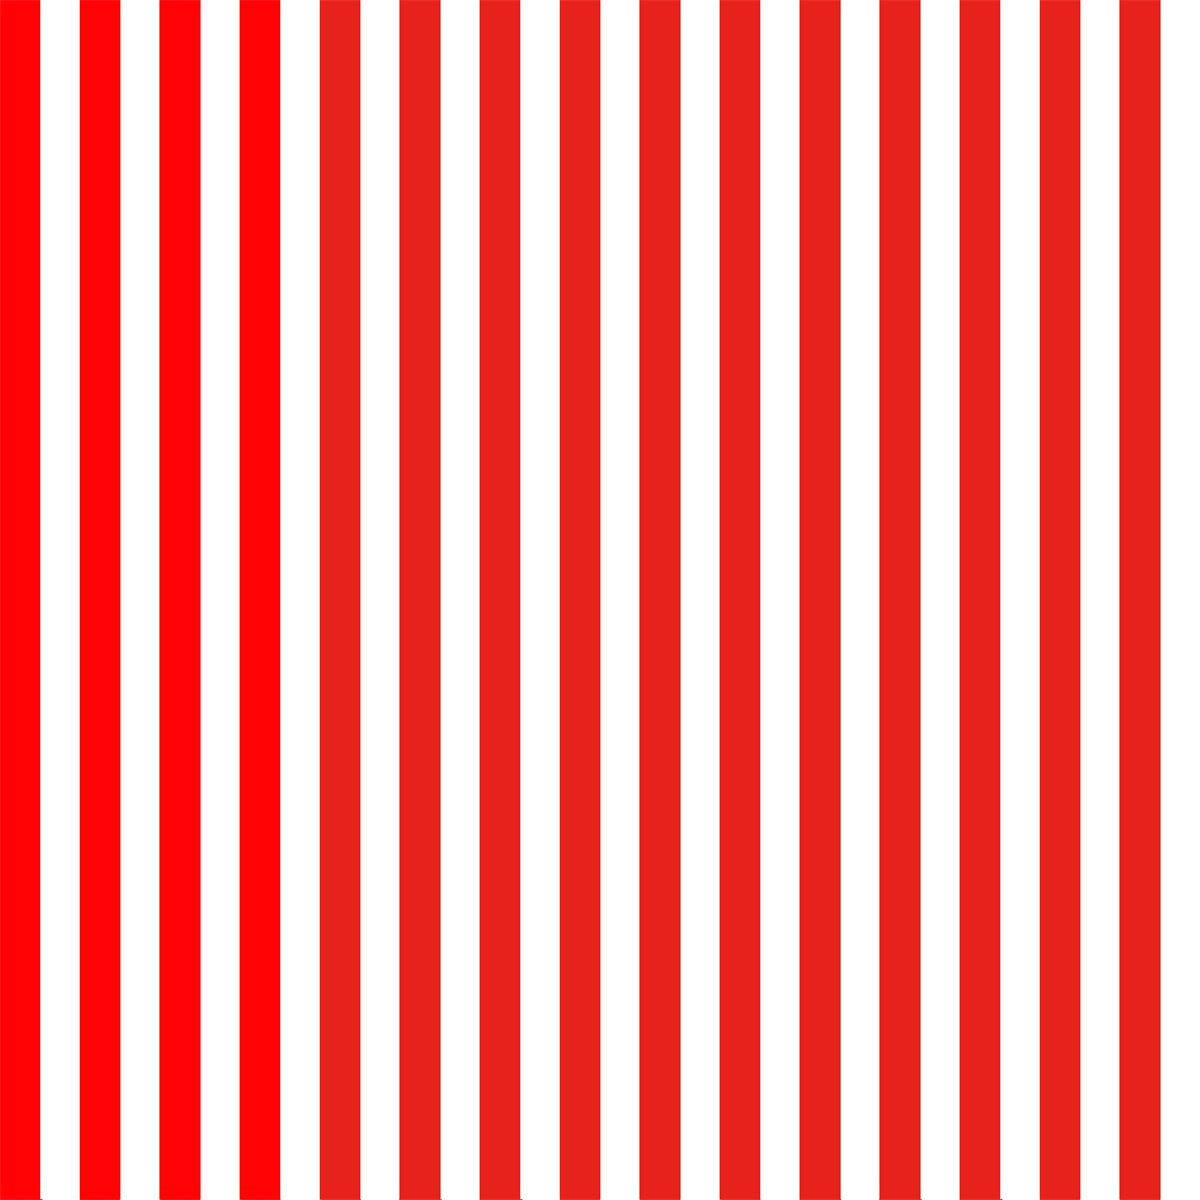 White and Red Stripes Photo Studio Backdrops